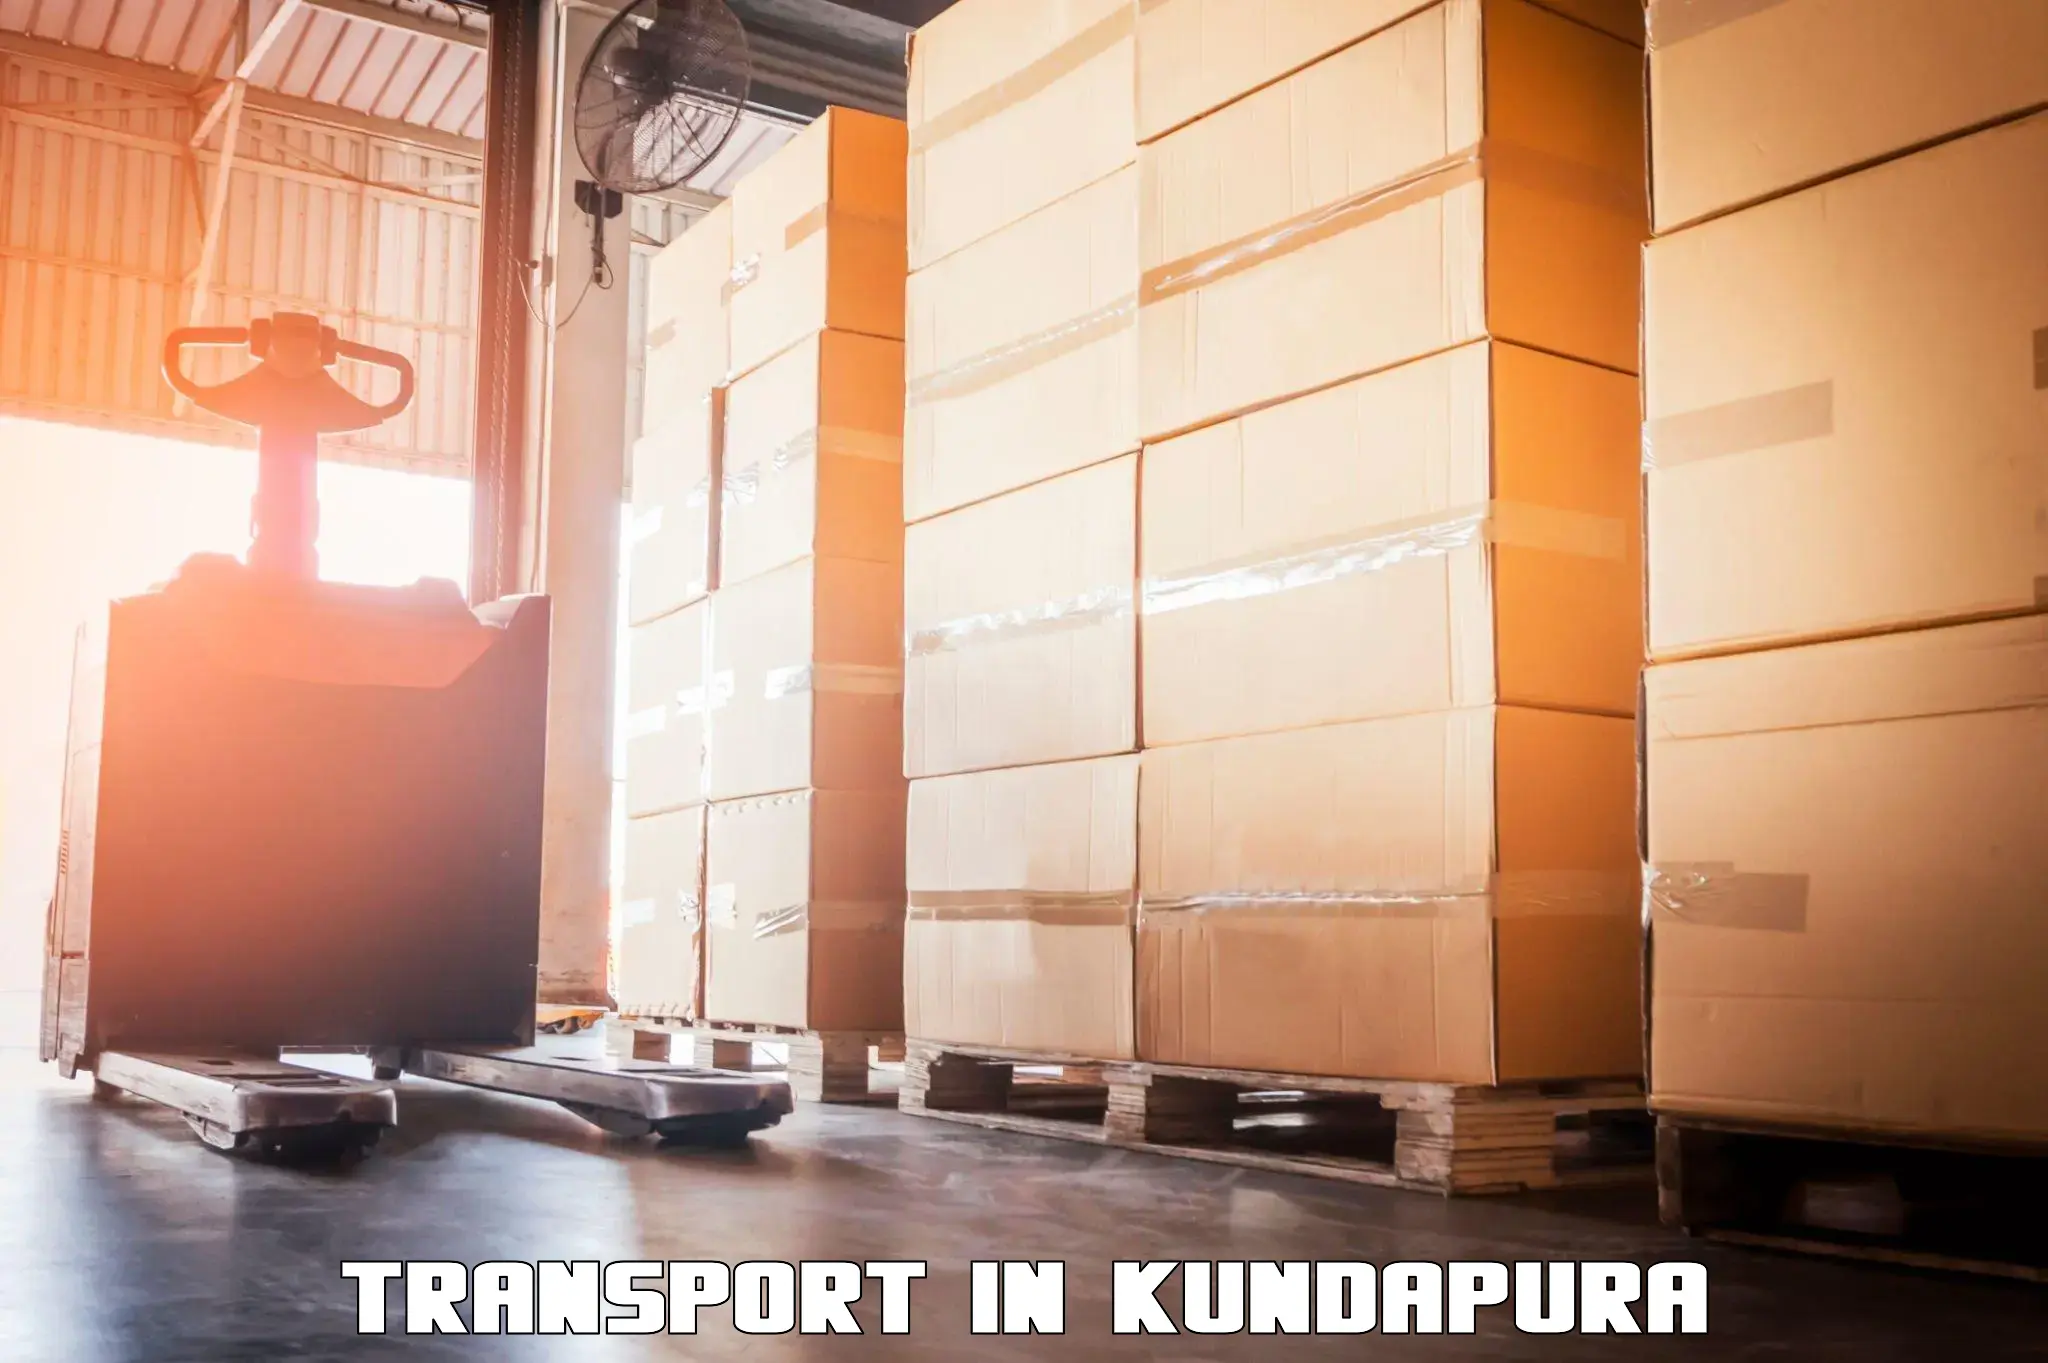 Interstate goods transport in Kundapura